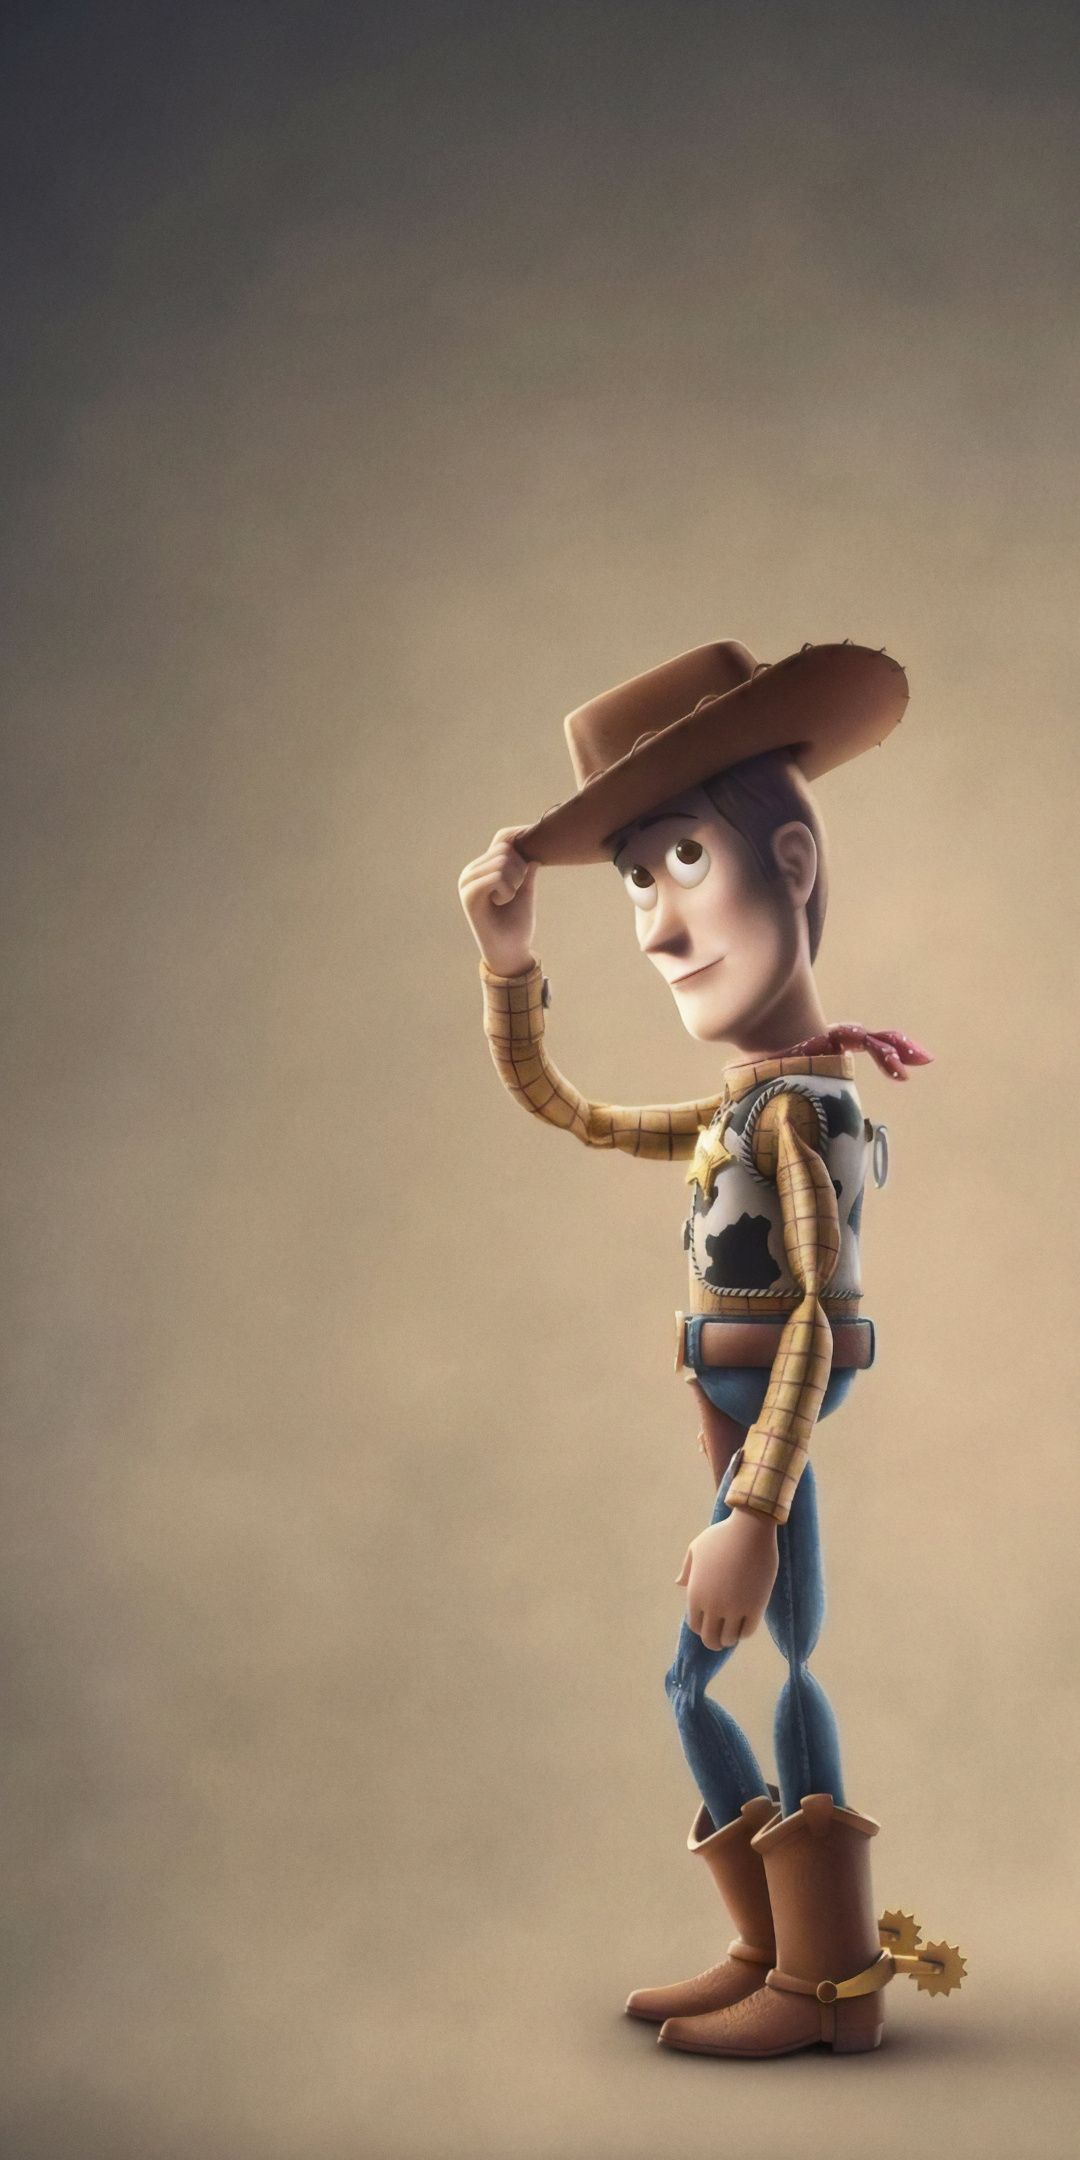 Toy story 4 Woody animation movie pixar 1080x2160 wallpaper